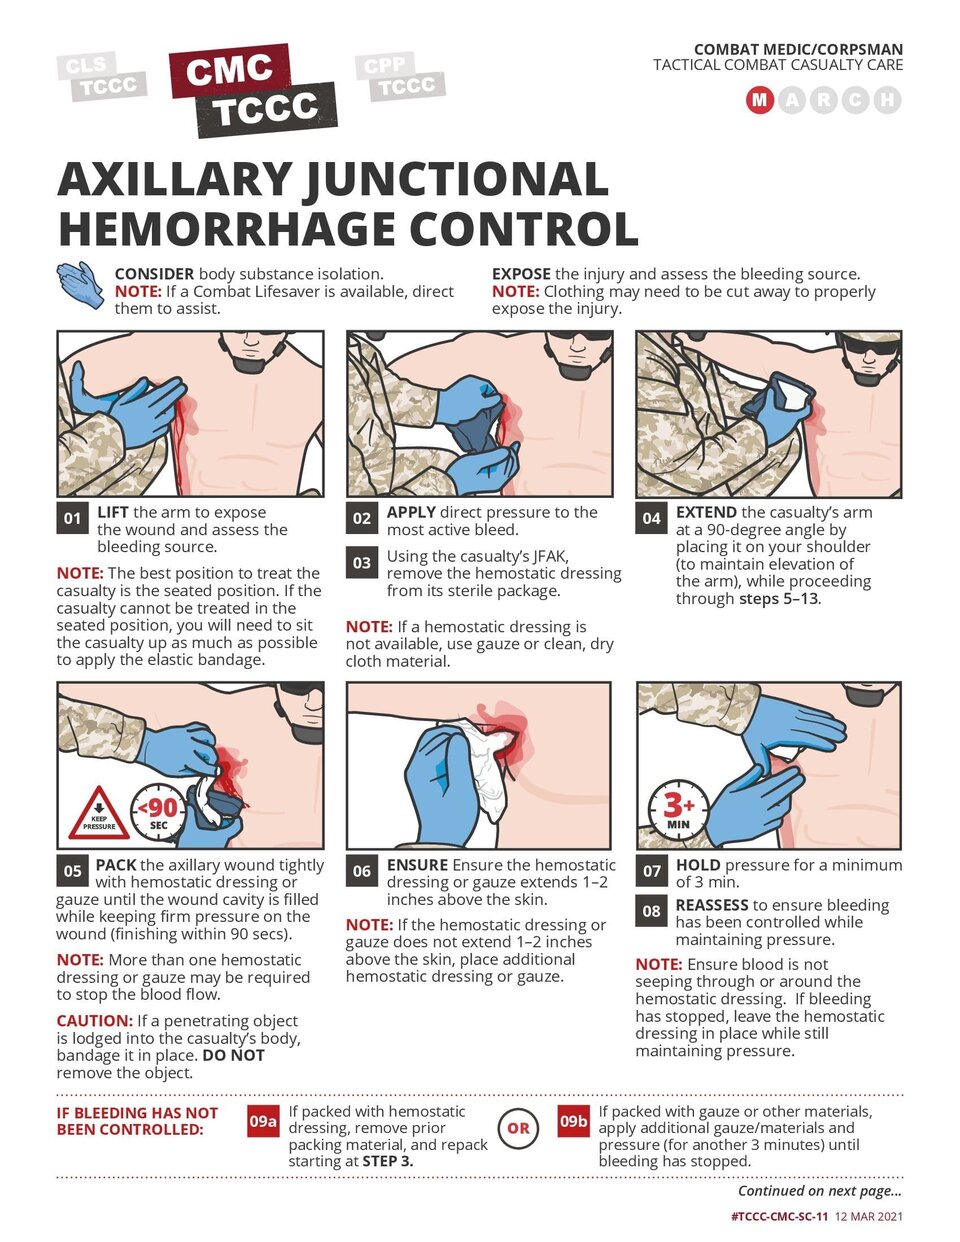 Axillary junctional hemorrhage control